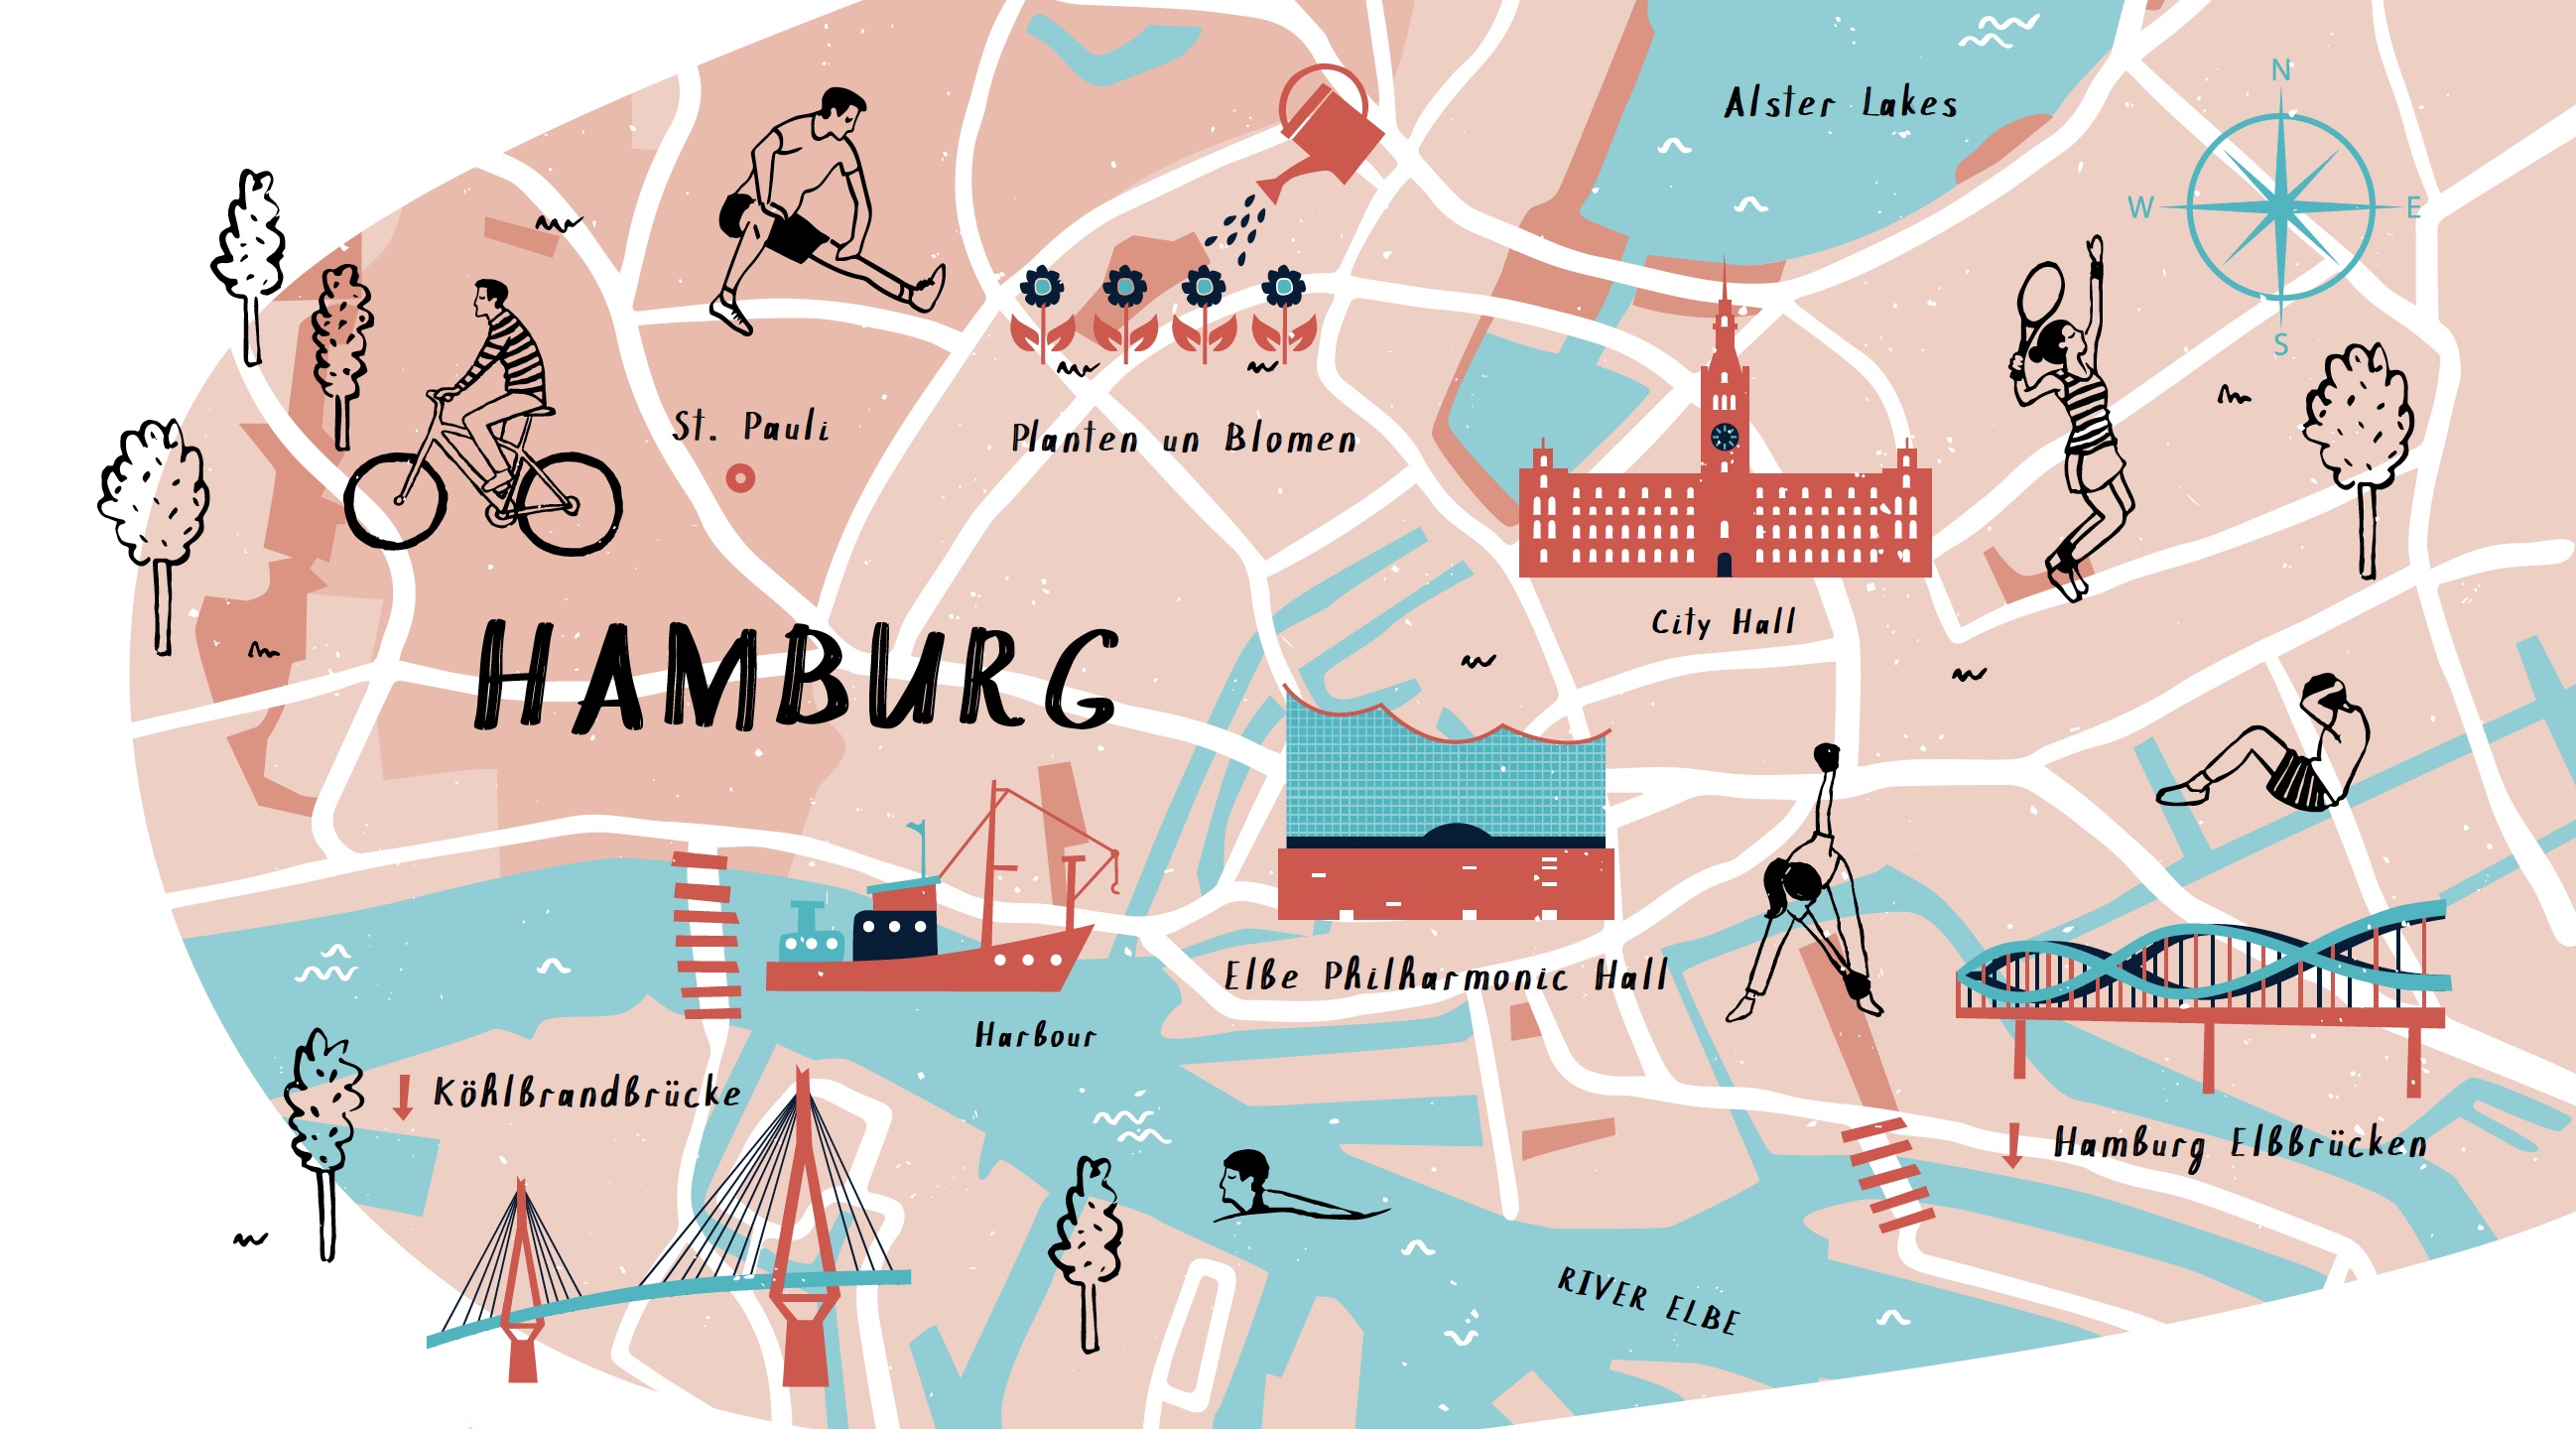 An illustrated map of Hamburg.